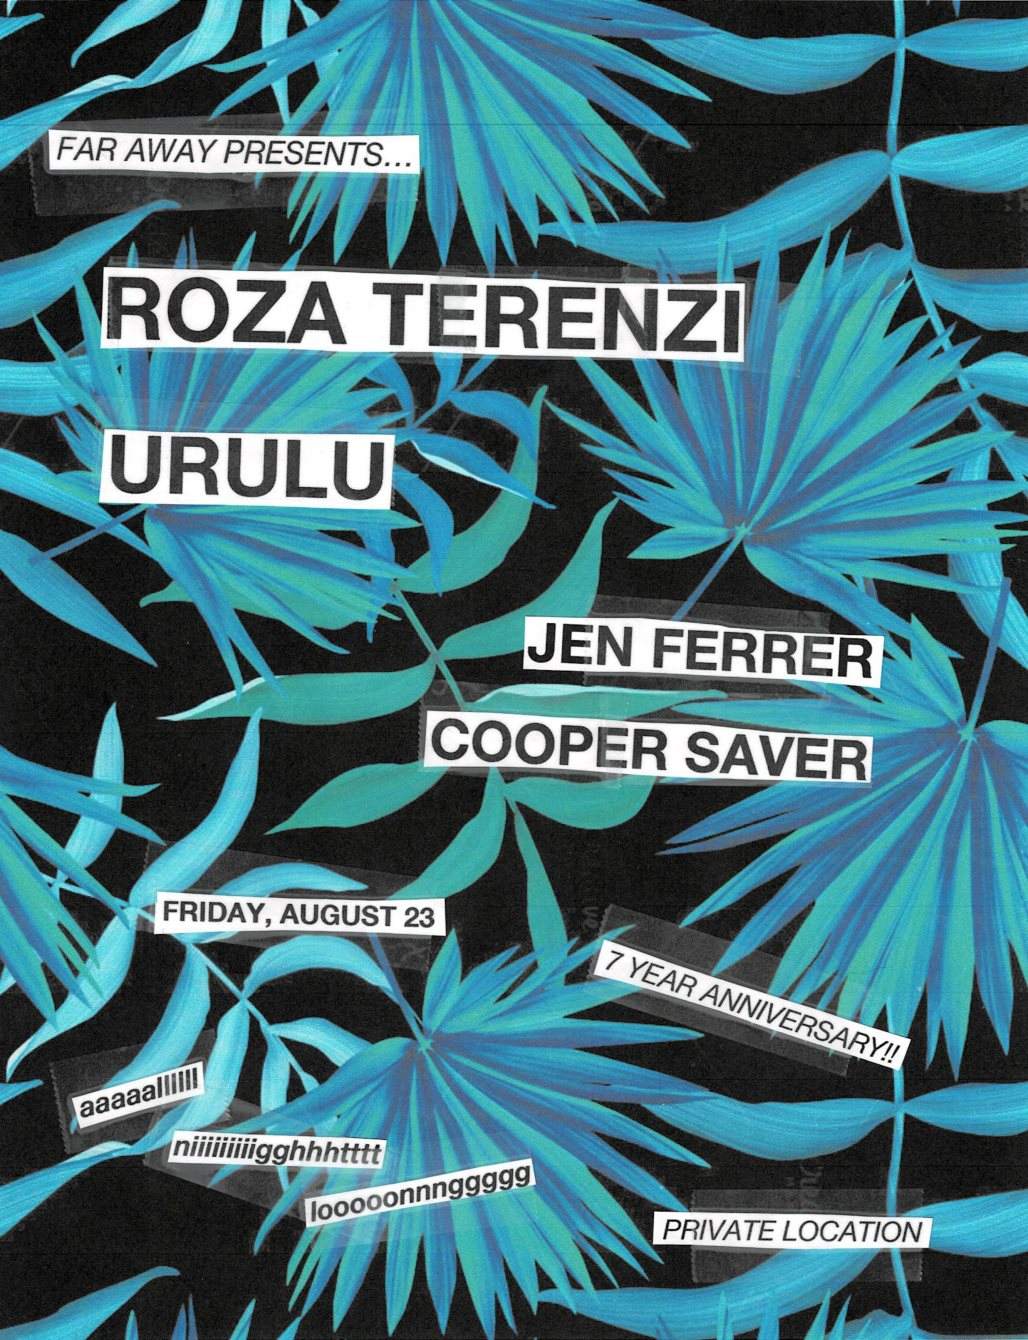 Far Away with Roza Terenzi & Urulu - フライヤー表